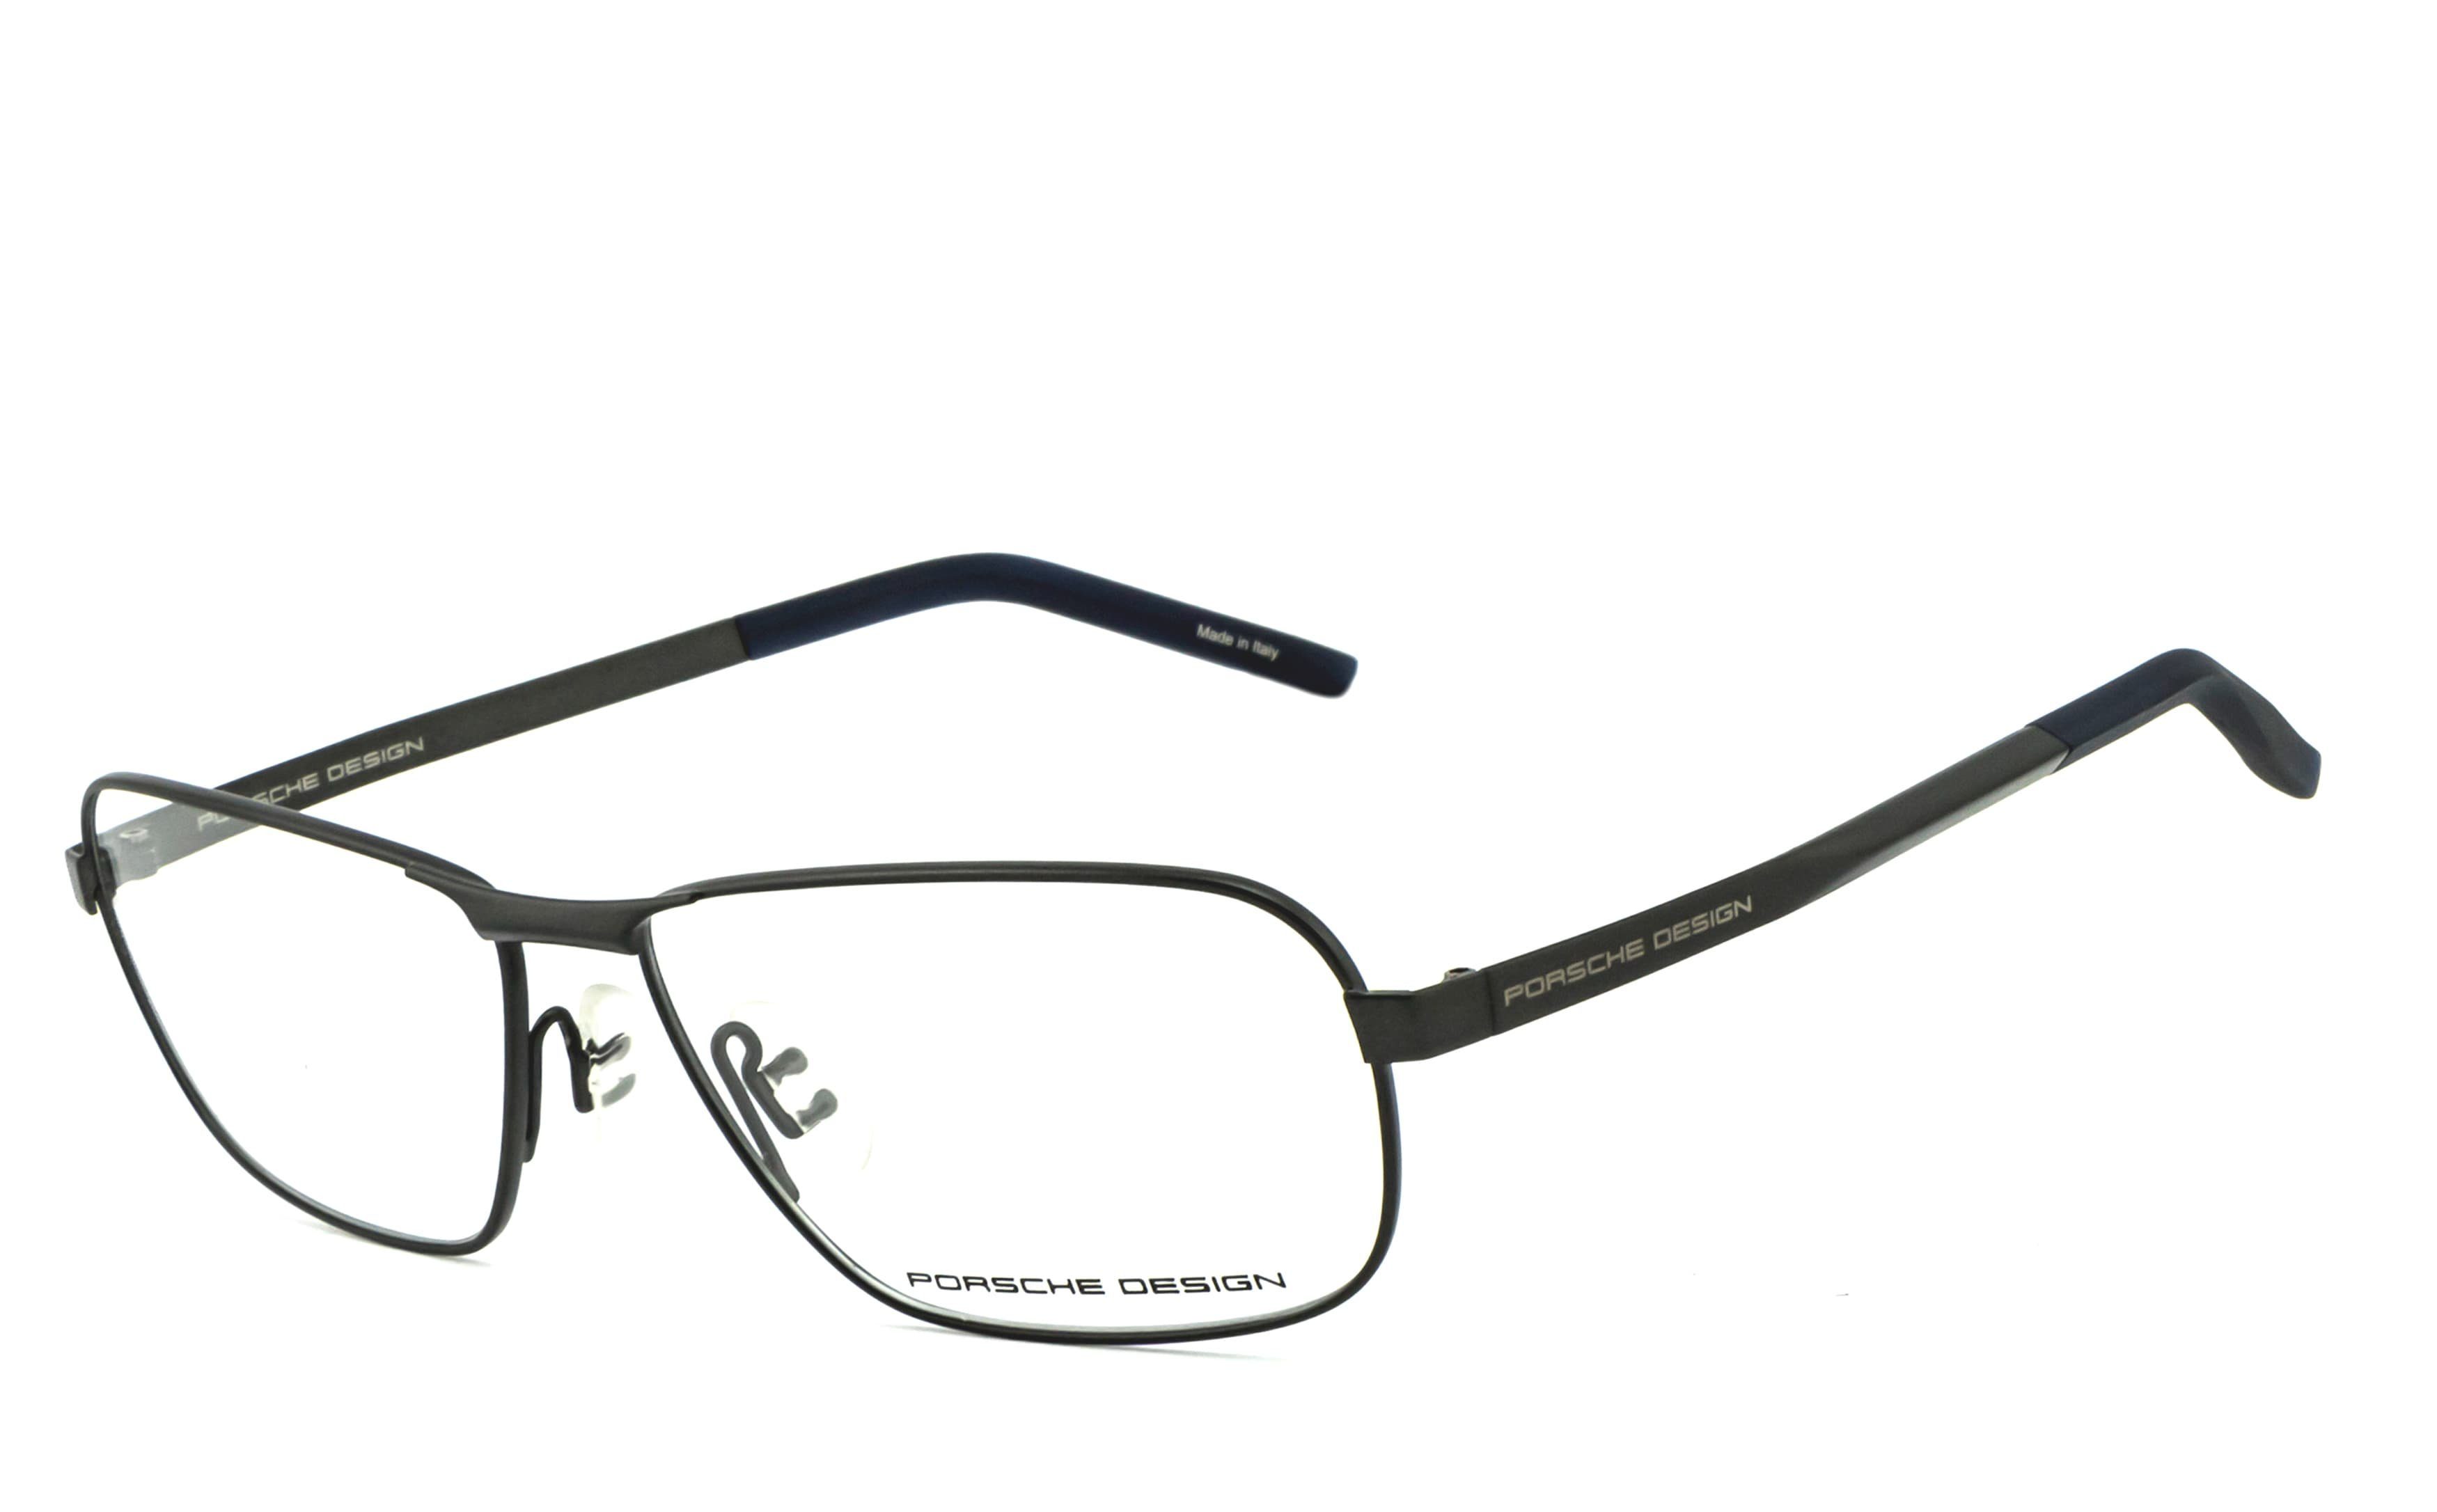 Design P8303 HLT® D, Qualitätsgläser Brille PORSCHE